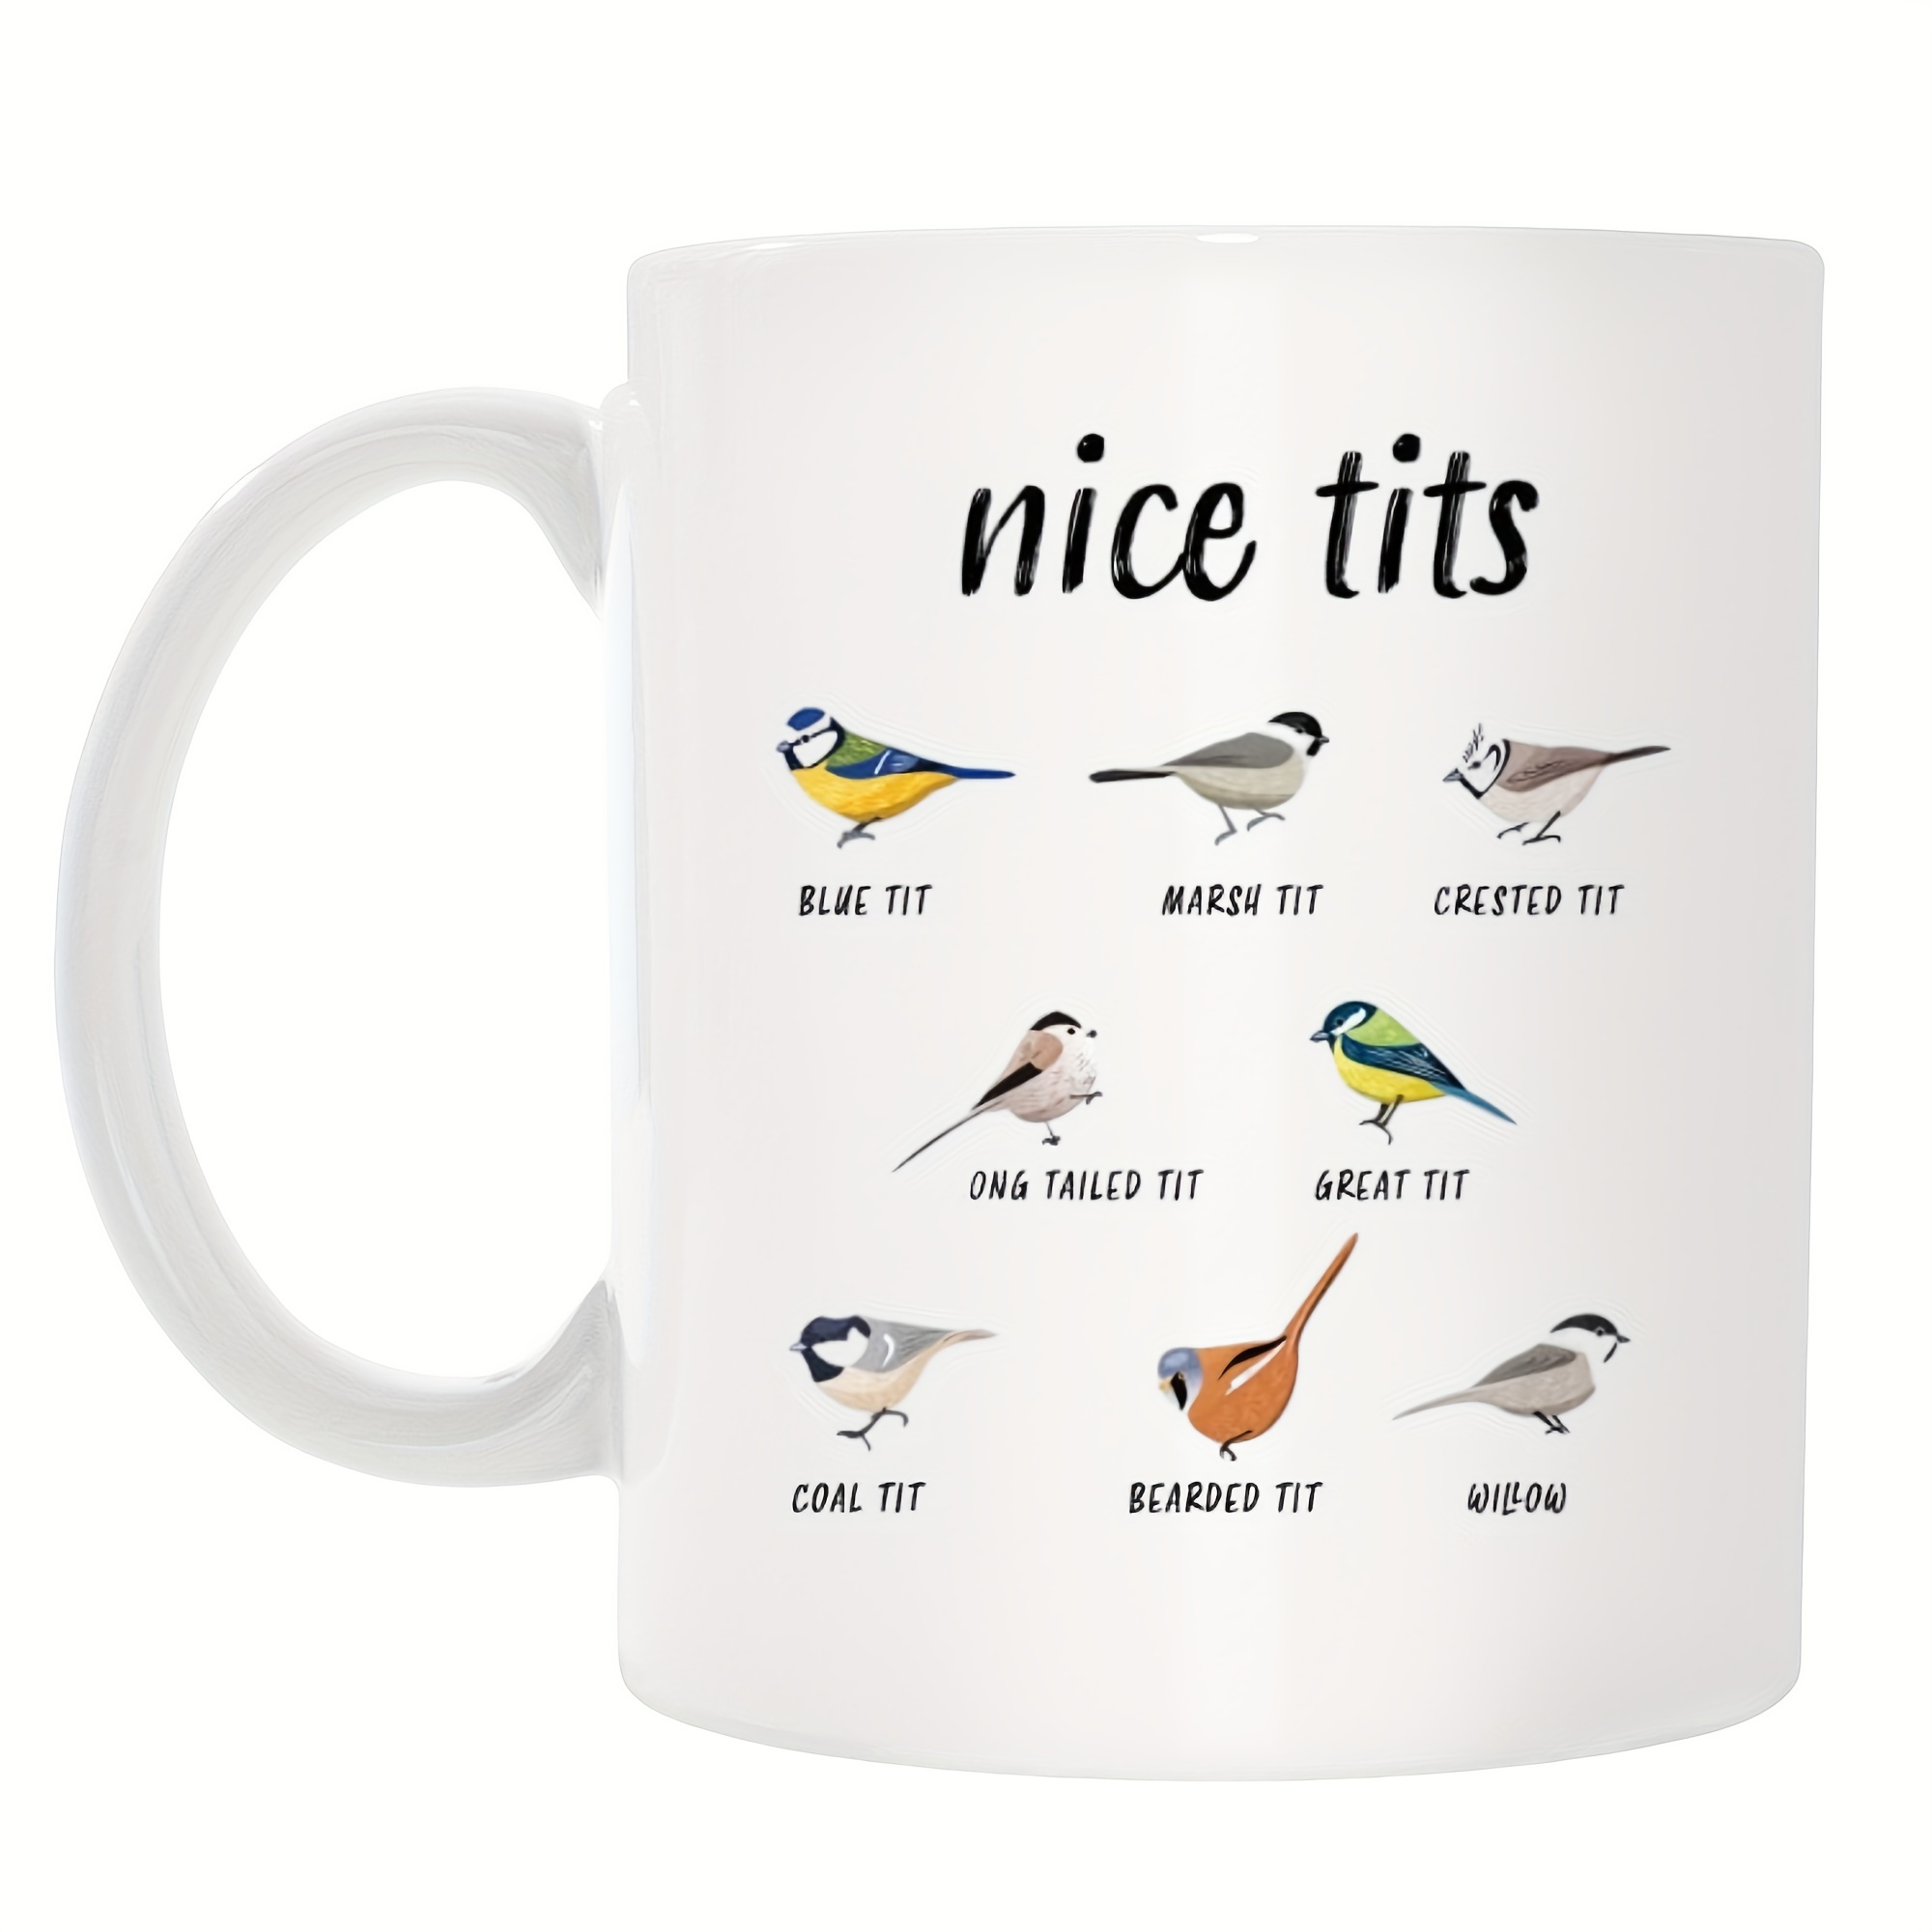 adrian militaru recommends Nice A Cup Tits